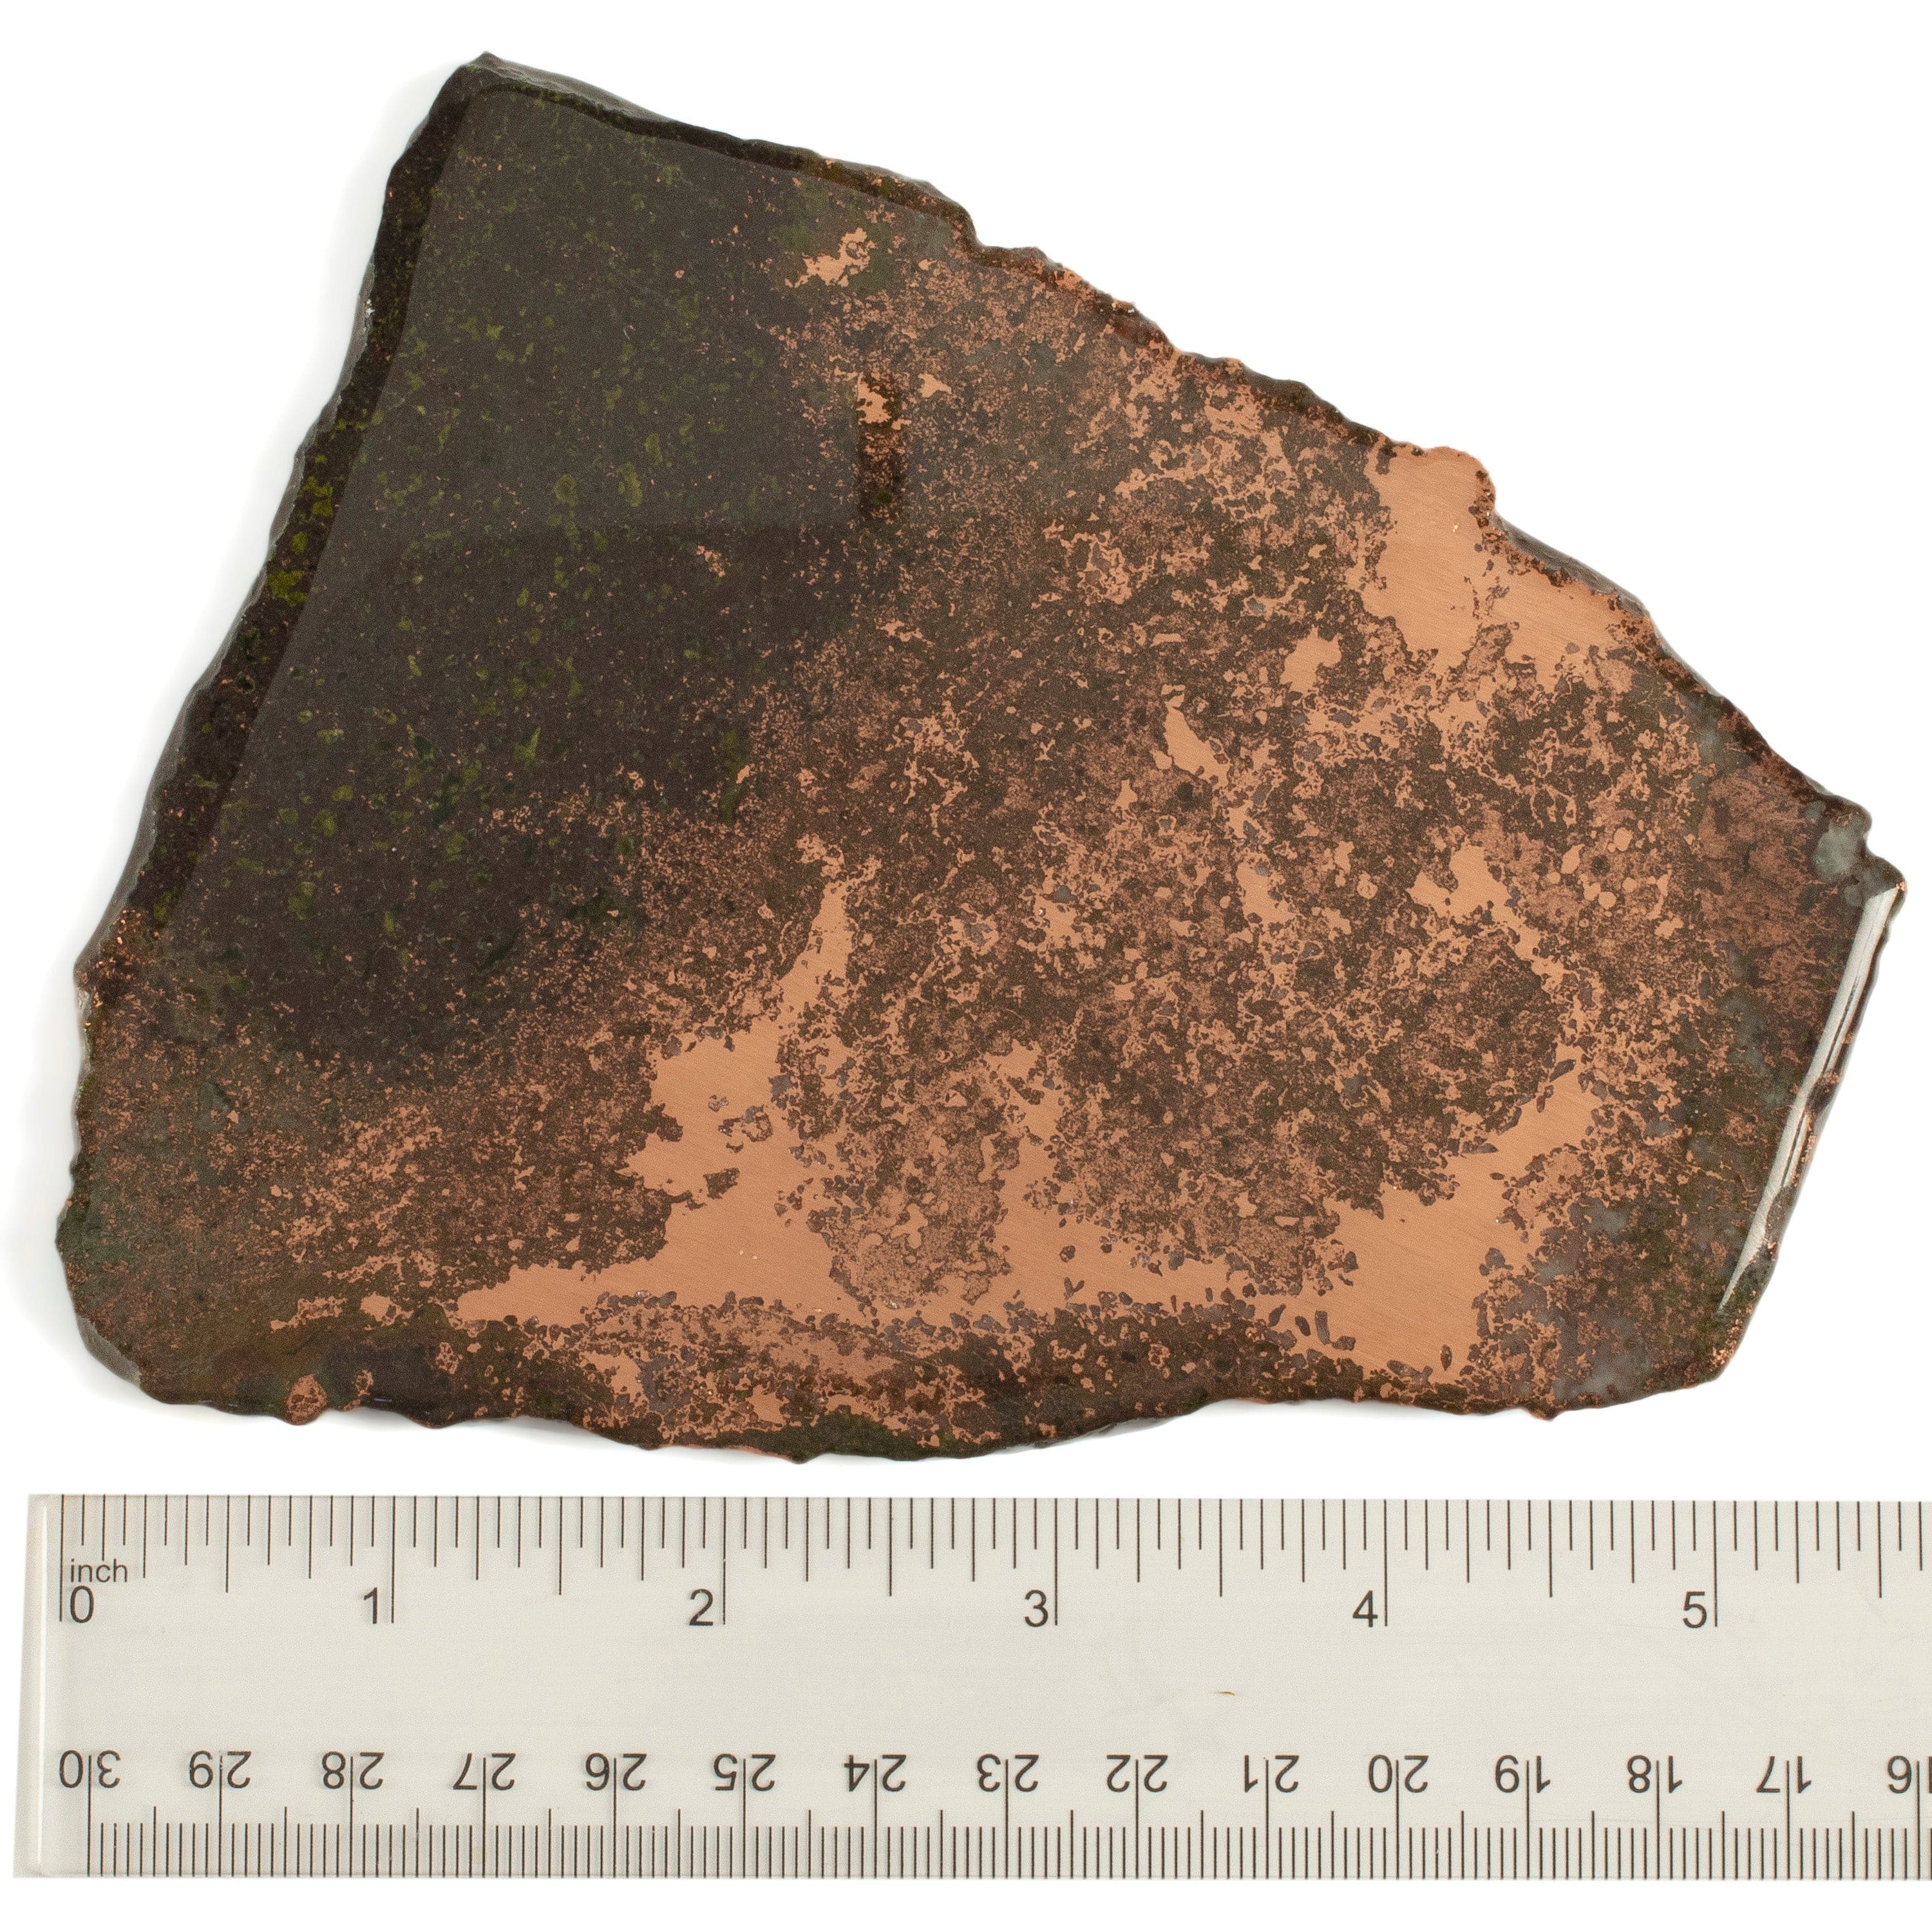 Kalifano Copper Copper Slab from Michigan - 8.5" / 470g CPR1000.004